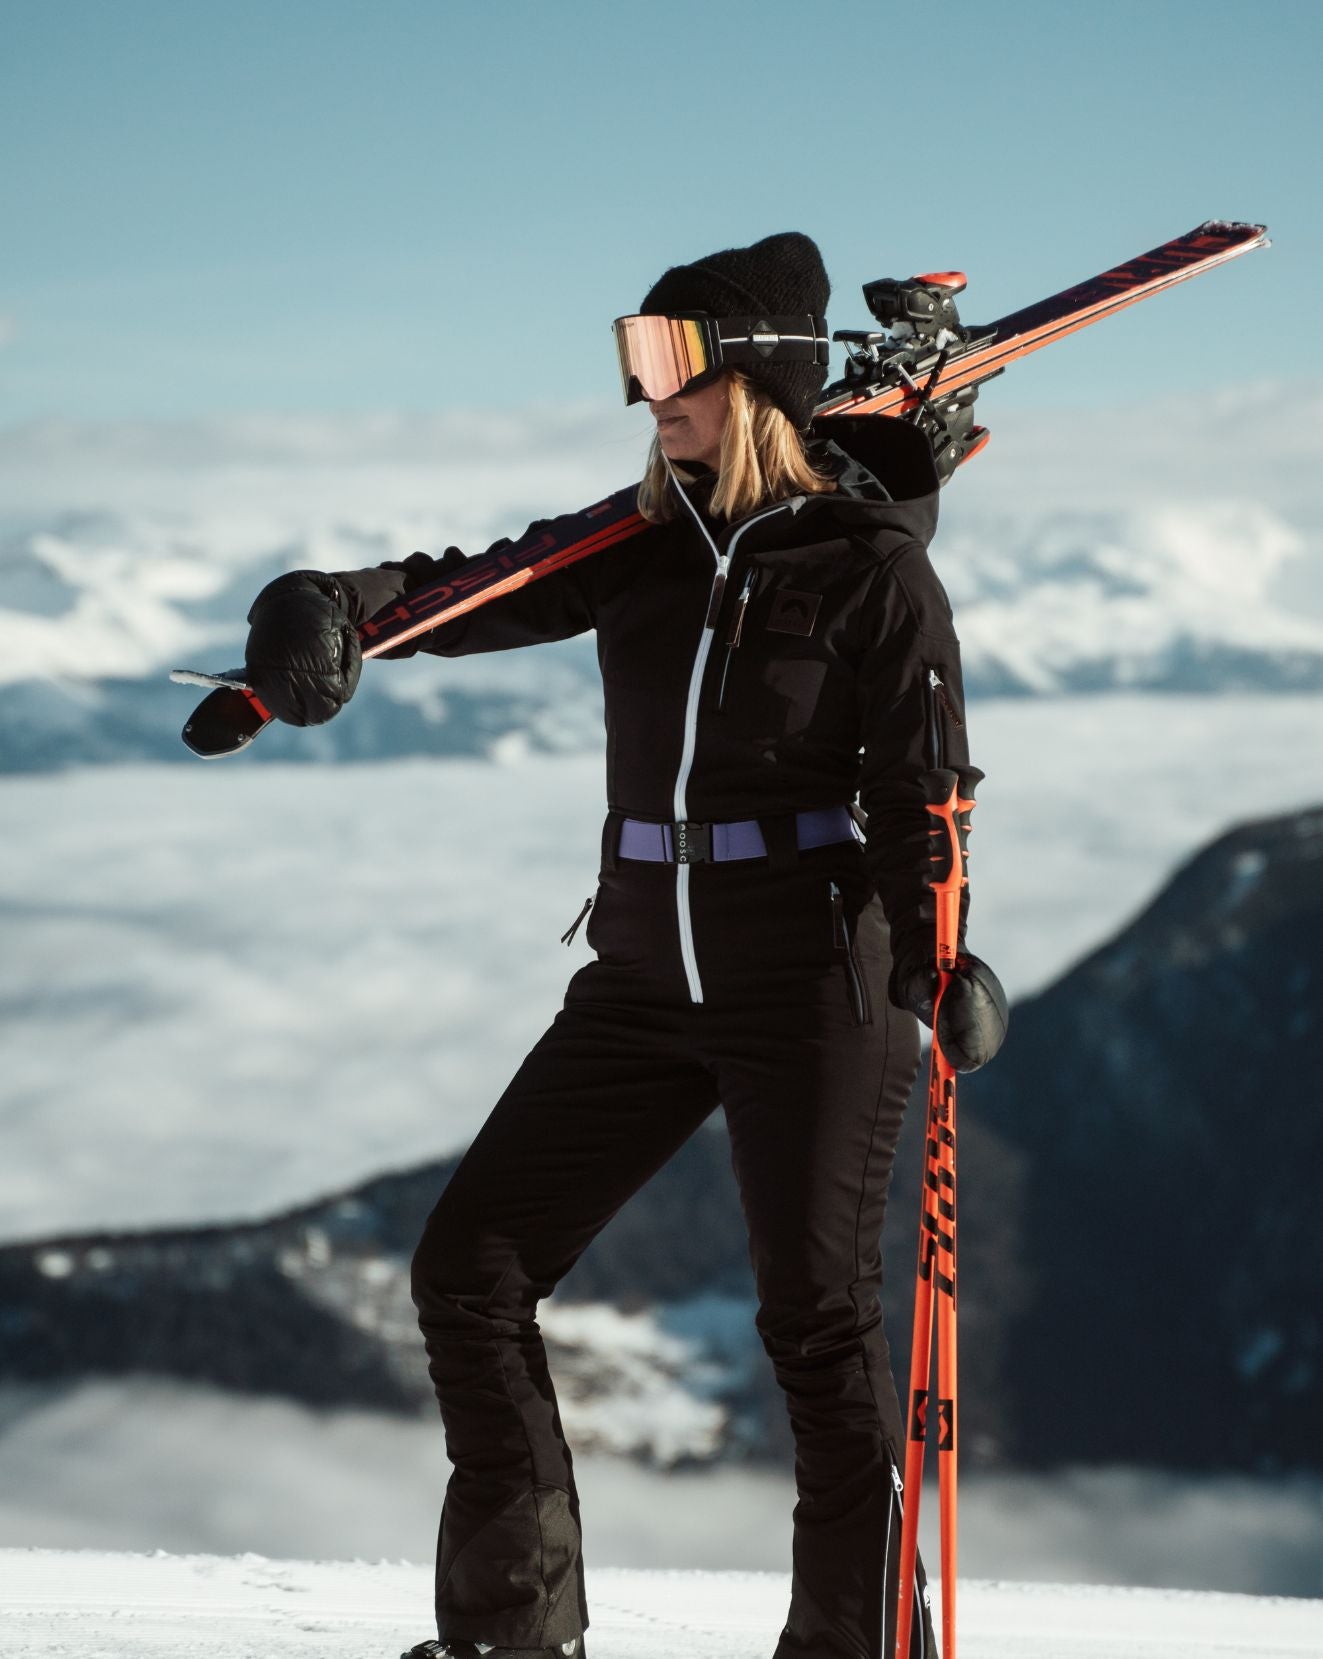 Womens Ski Pants – OOSC Clothing - AUS/NZ